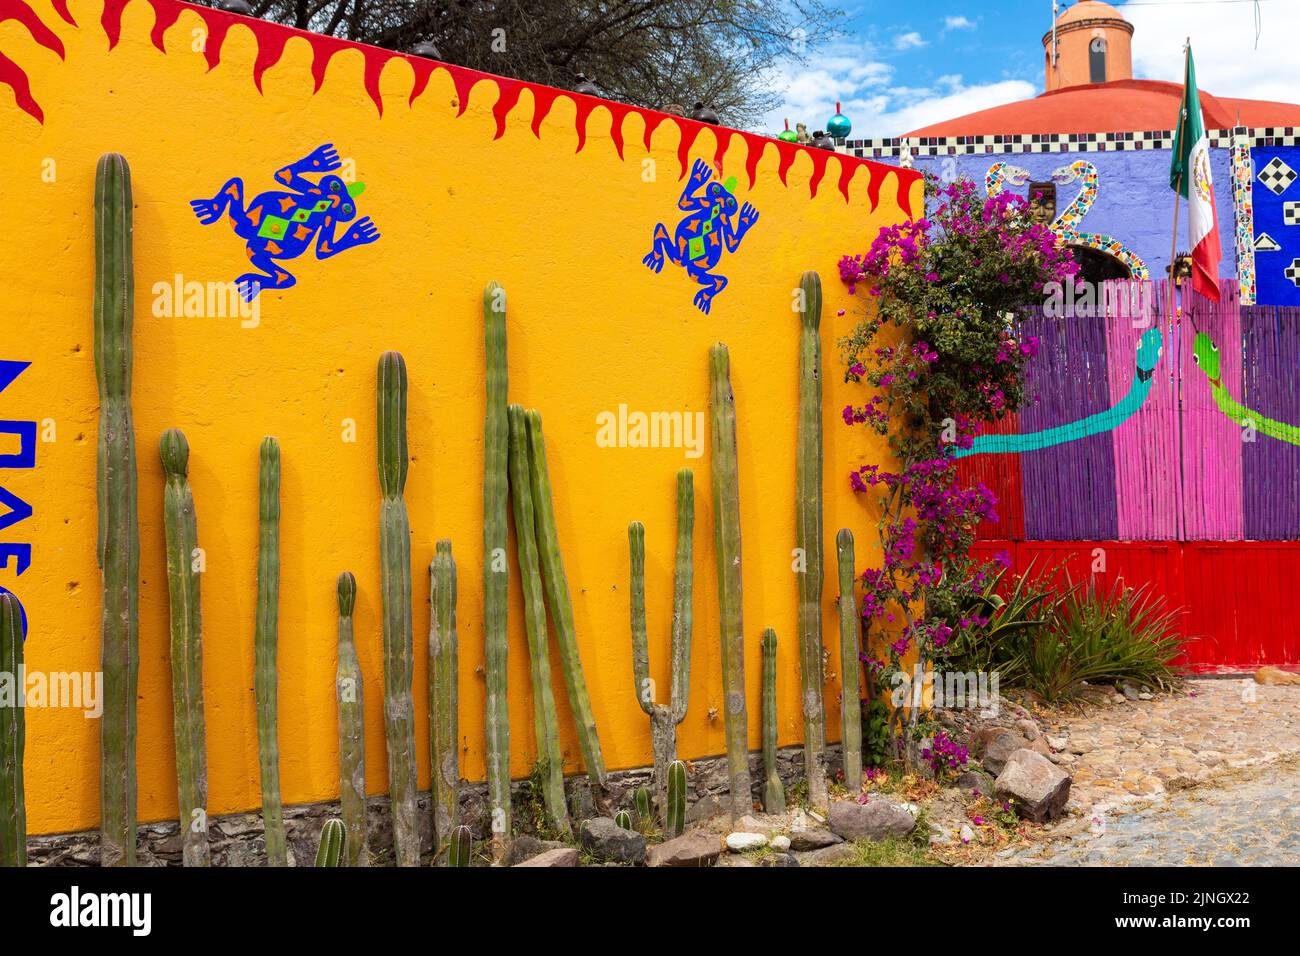 The colorful facade of American artist Anado McLauchlin home and studio called the Chapel of Jimmy Ray in his art compound Casa las Ranas in La Cieneguita, Mexico. Stock Photo